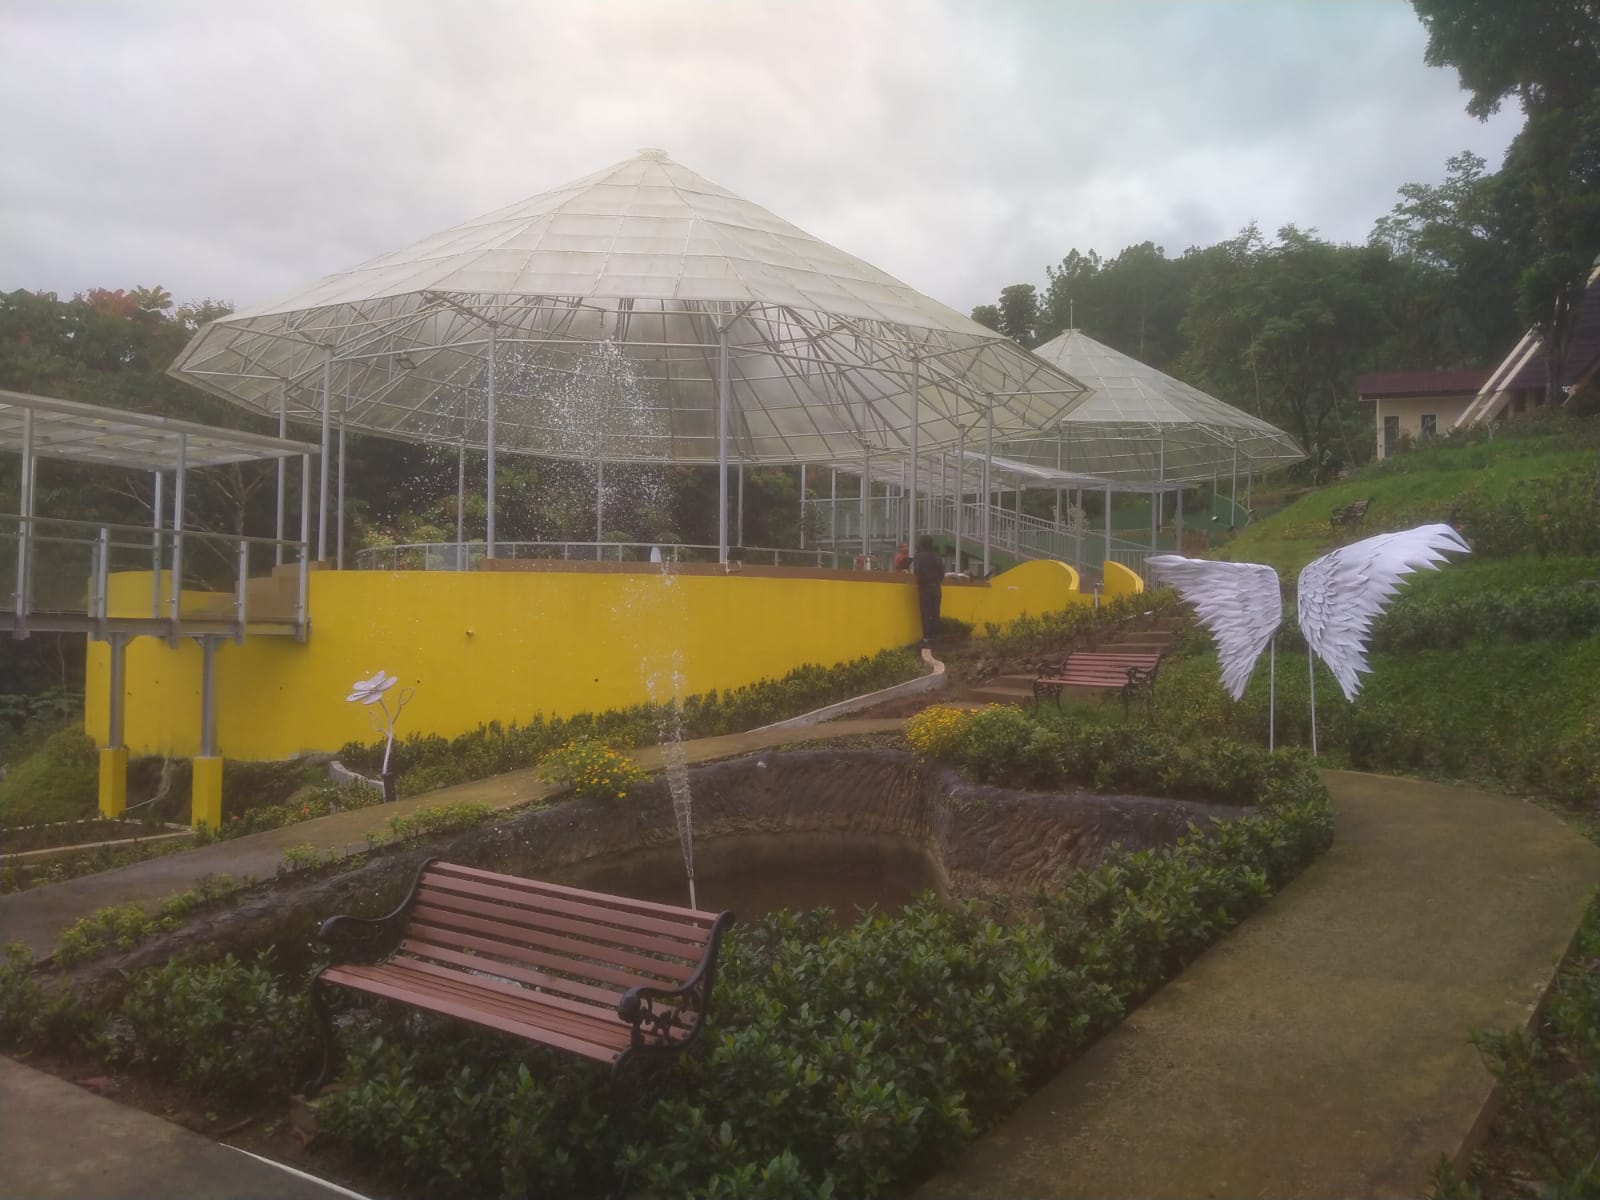 Sewa Resto Taman Botani Termahal Rp 44 Juta Per Tahun, Bangunan Gazebo Rp 8,5 Juta Per Unit